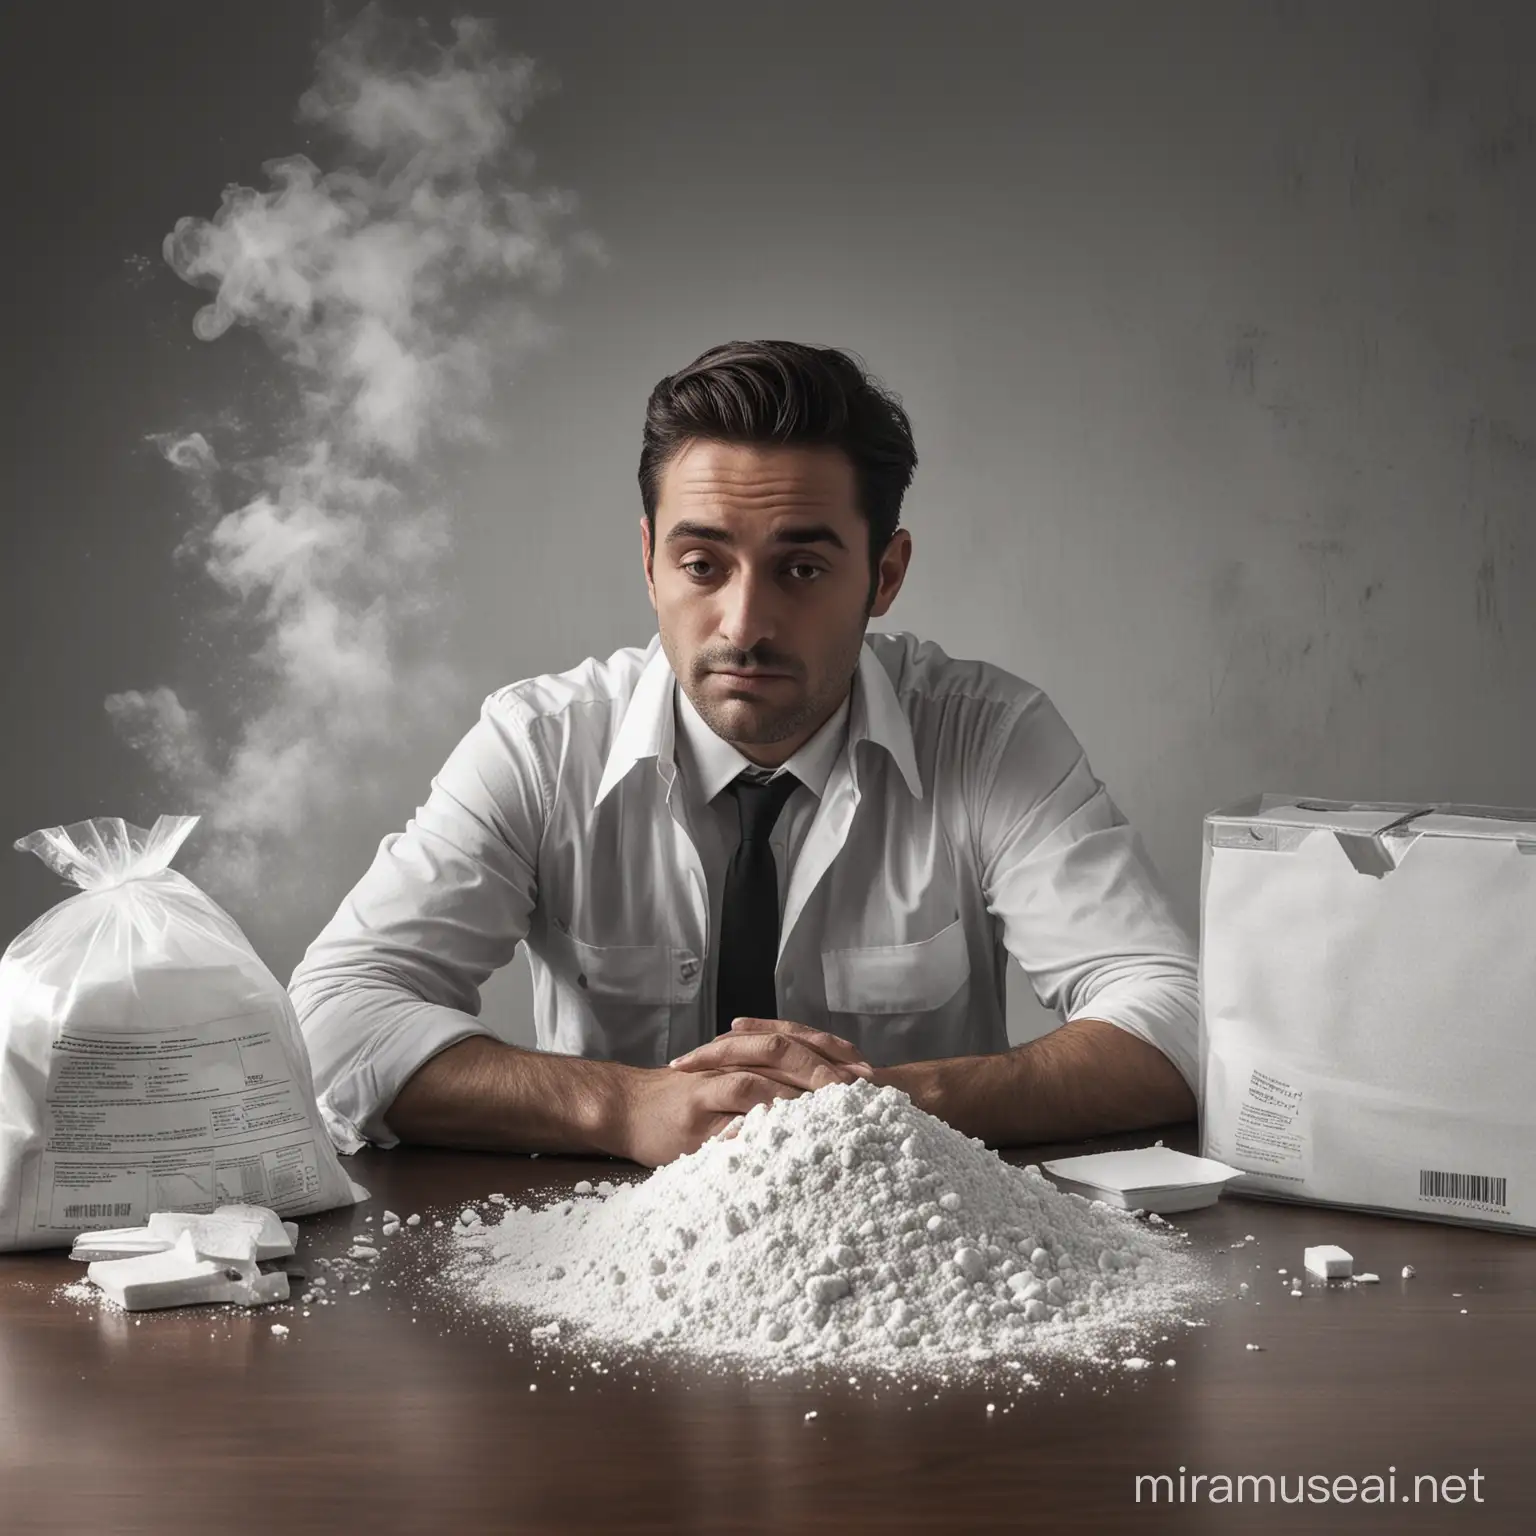 Businessman at Desk with Cocaine Pile